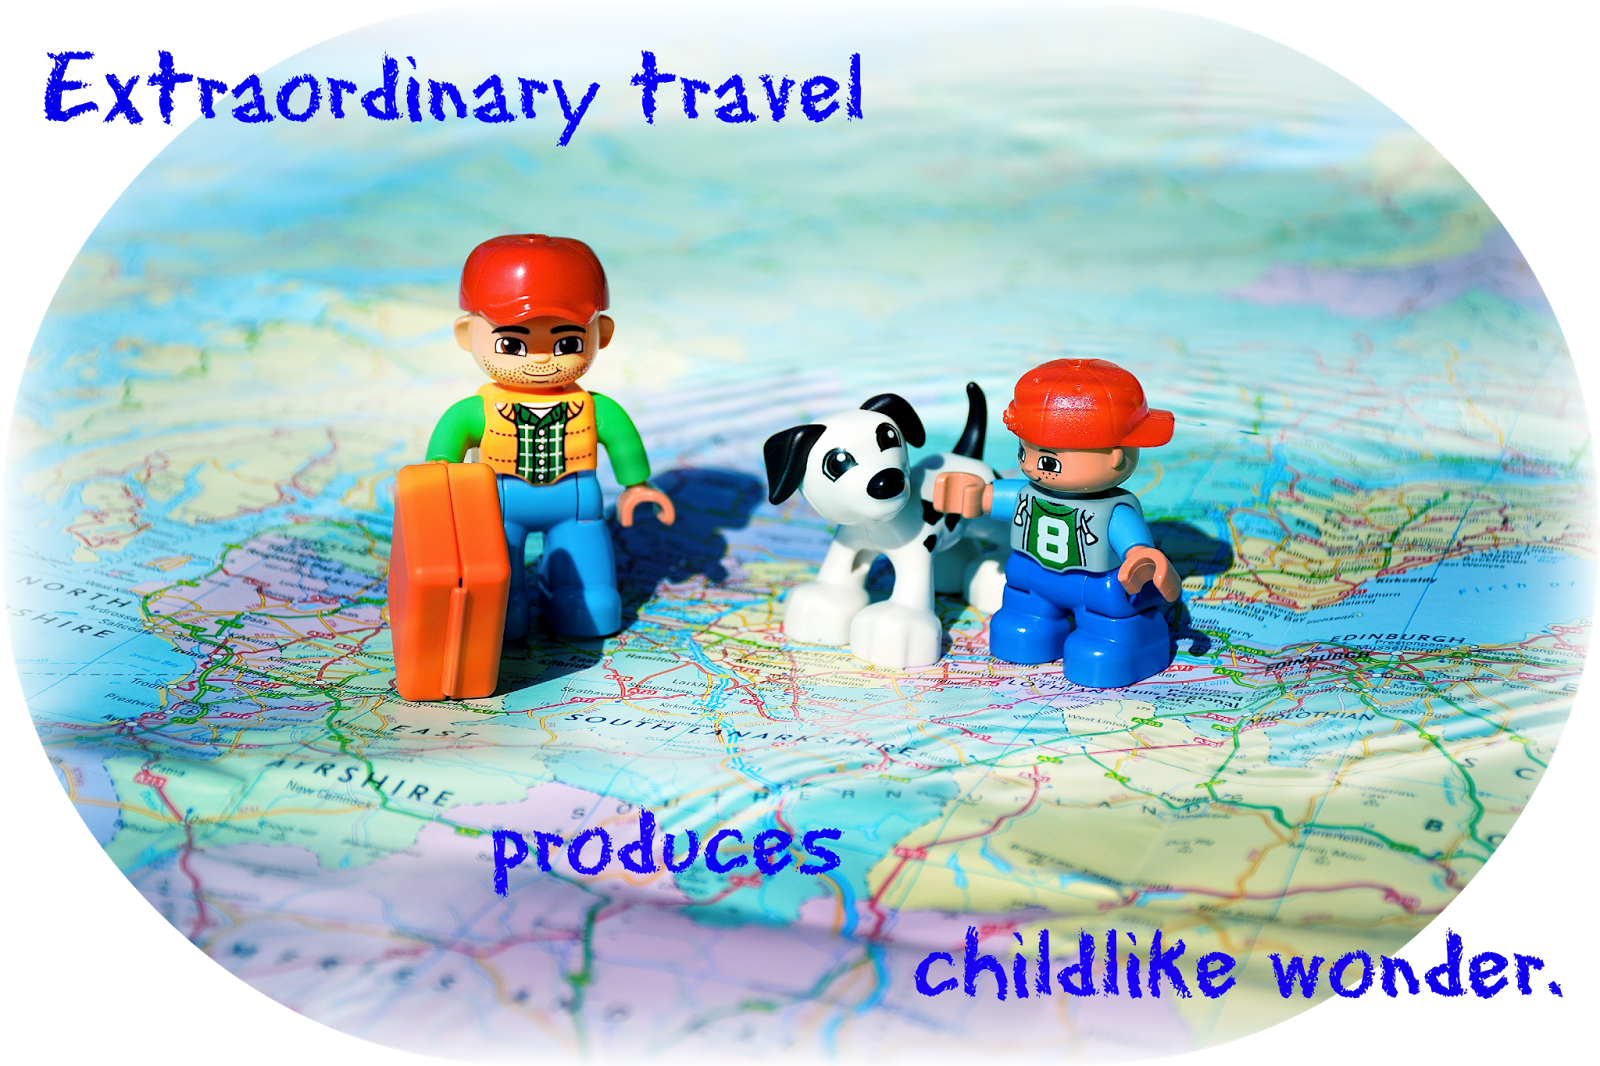 Extraordinary travel produces childlike wonder